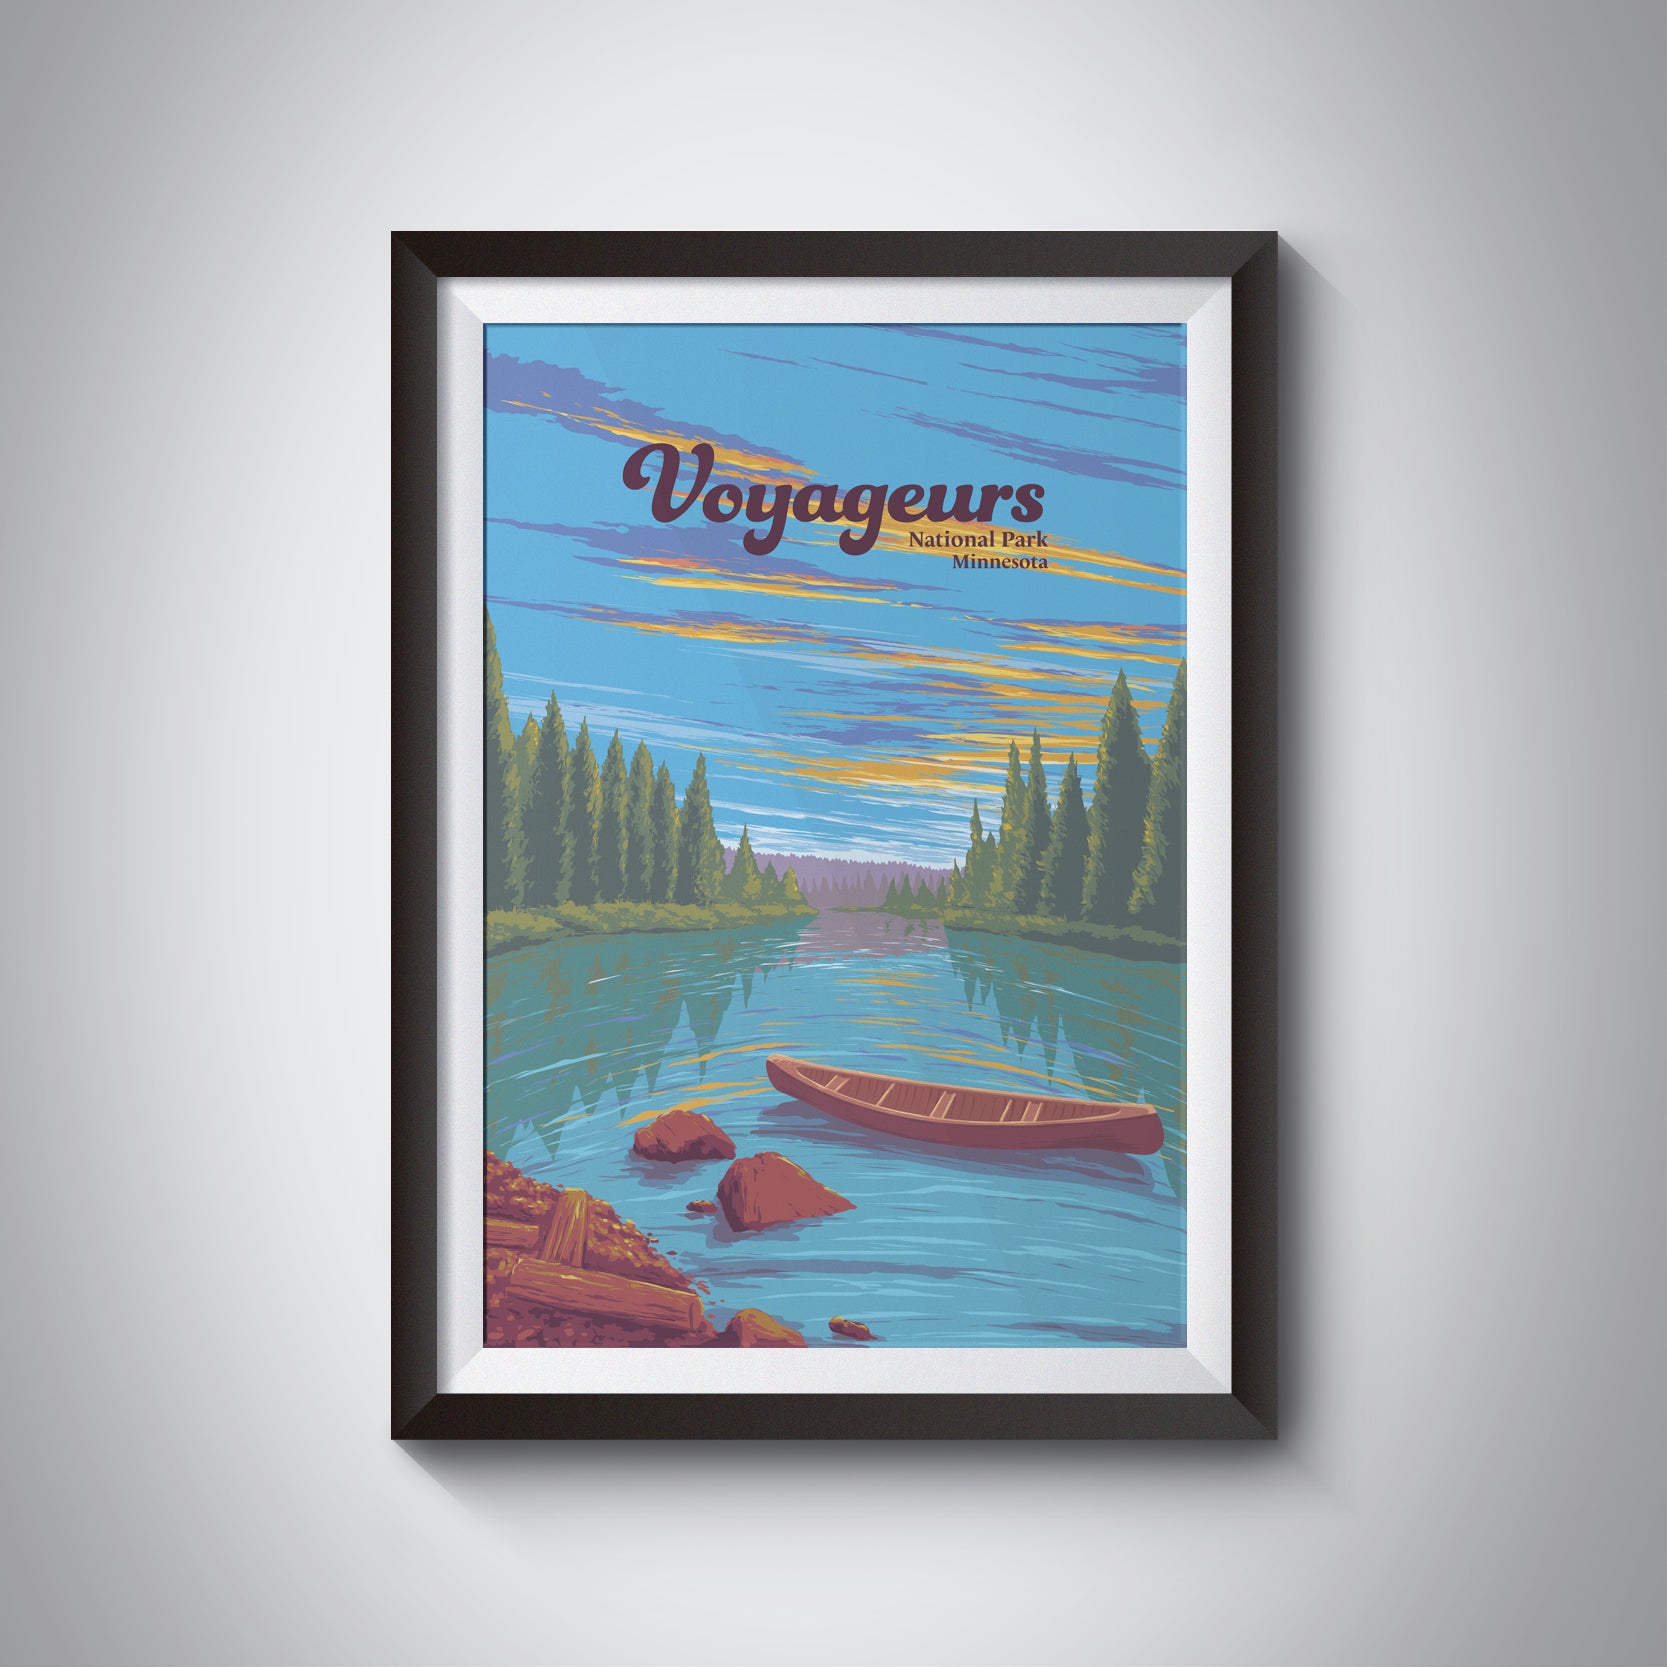 Voyageurs National Park Travel Poster